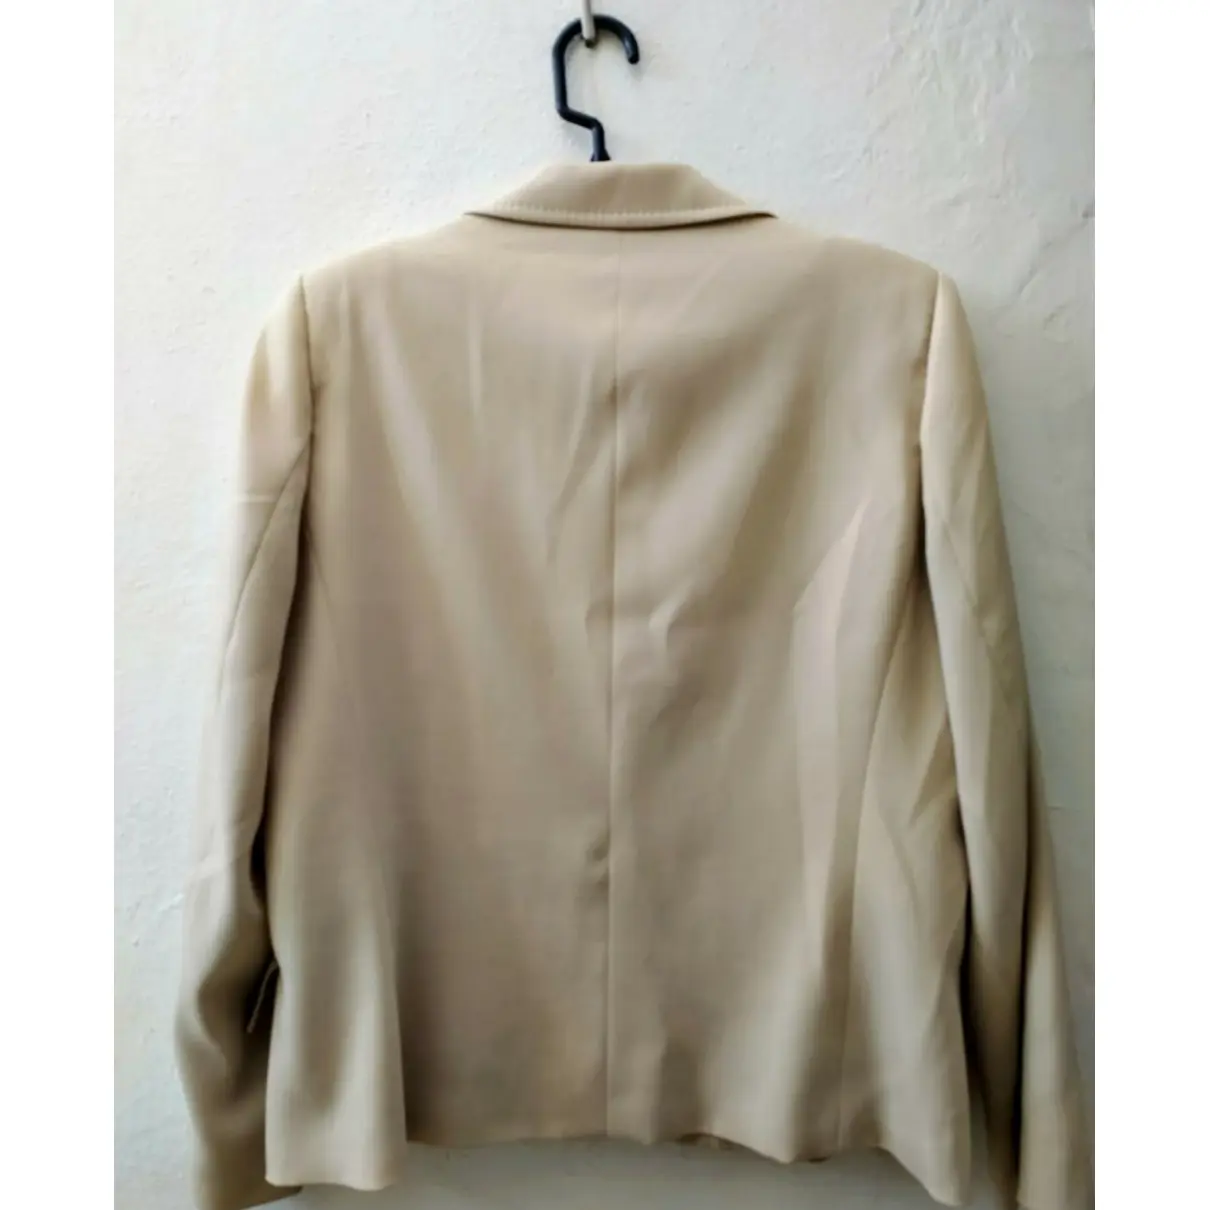 Buy Burberry Beige Polyester Jacket online